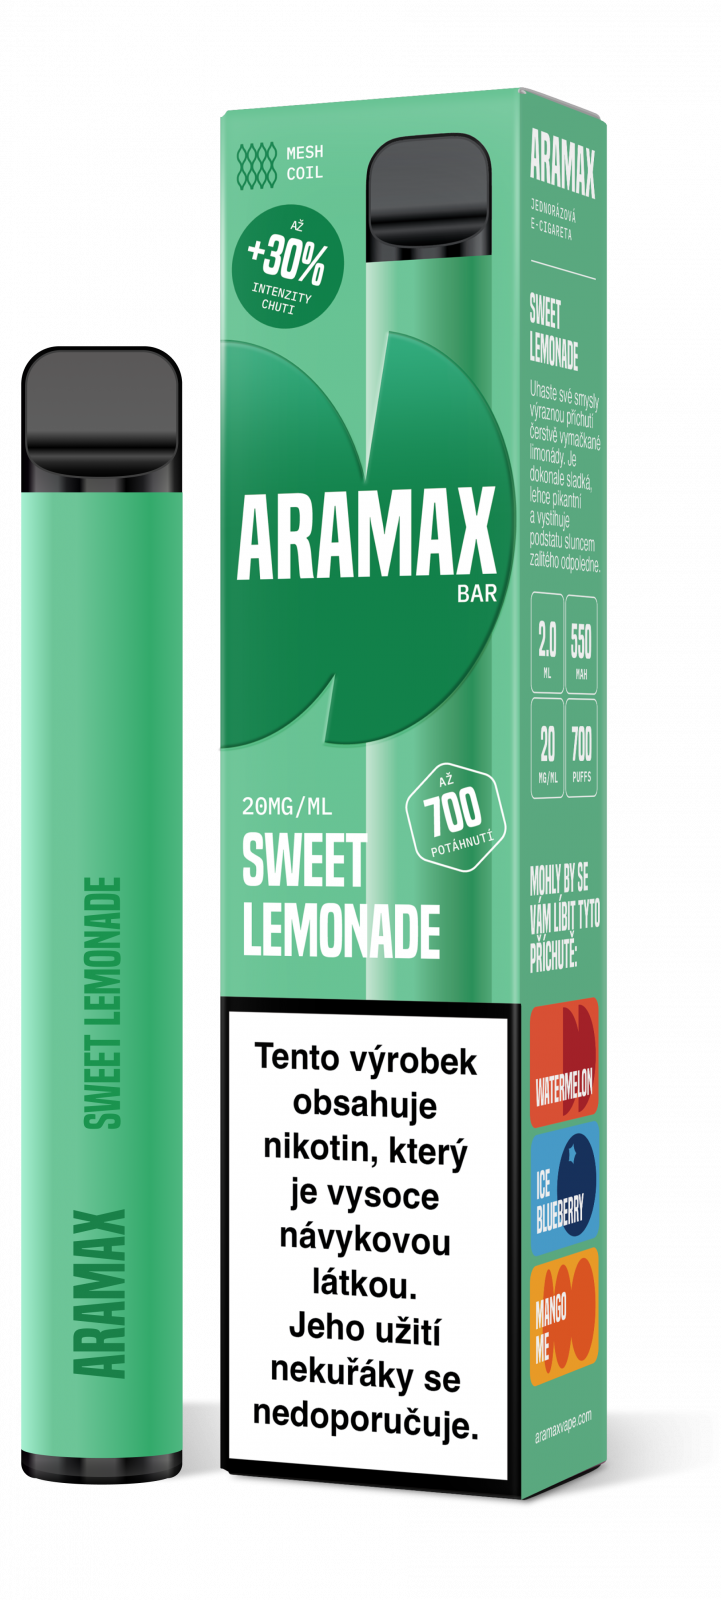 SWEET LEMONADE 20mg/ml - Aramax Bar 700 - jednorazová e-cigareta